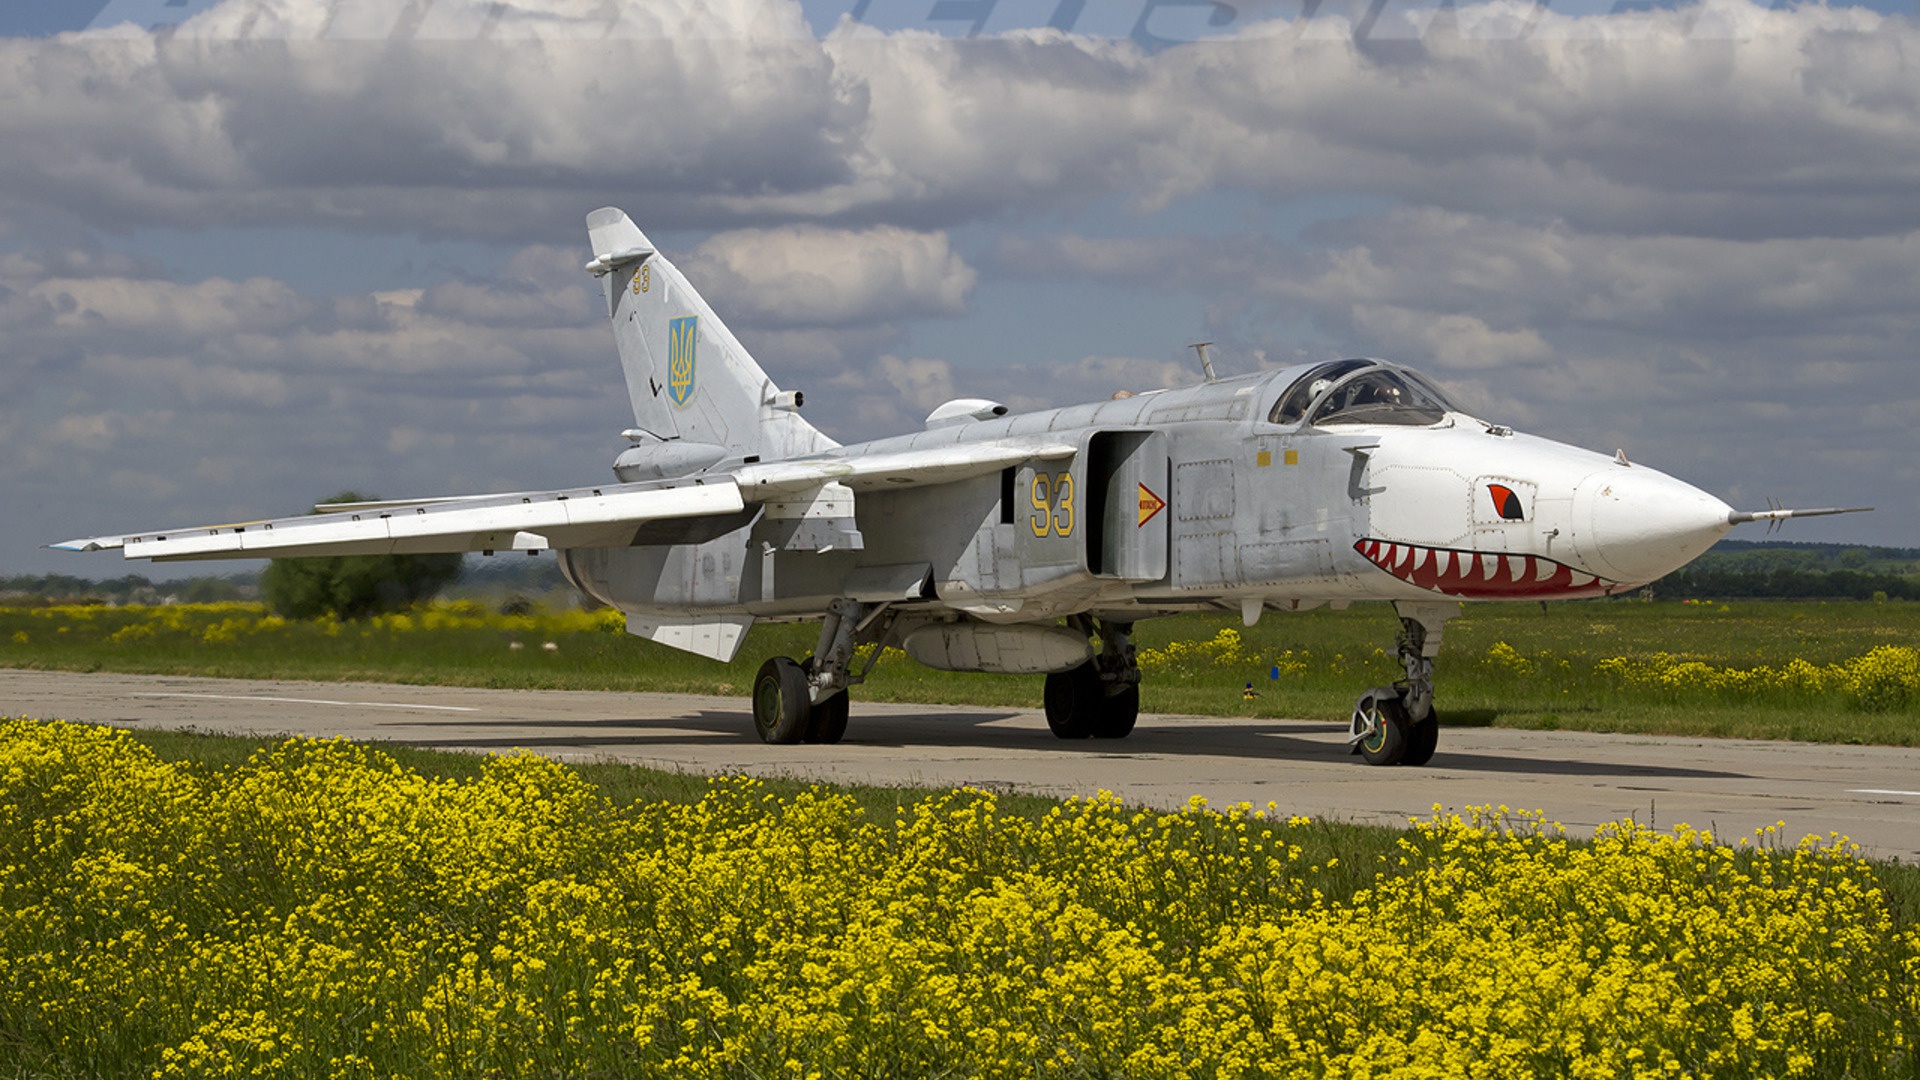 A Ukrainian Air Force Sukhoi Su-24